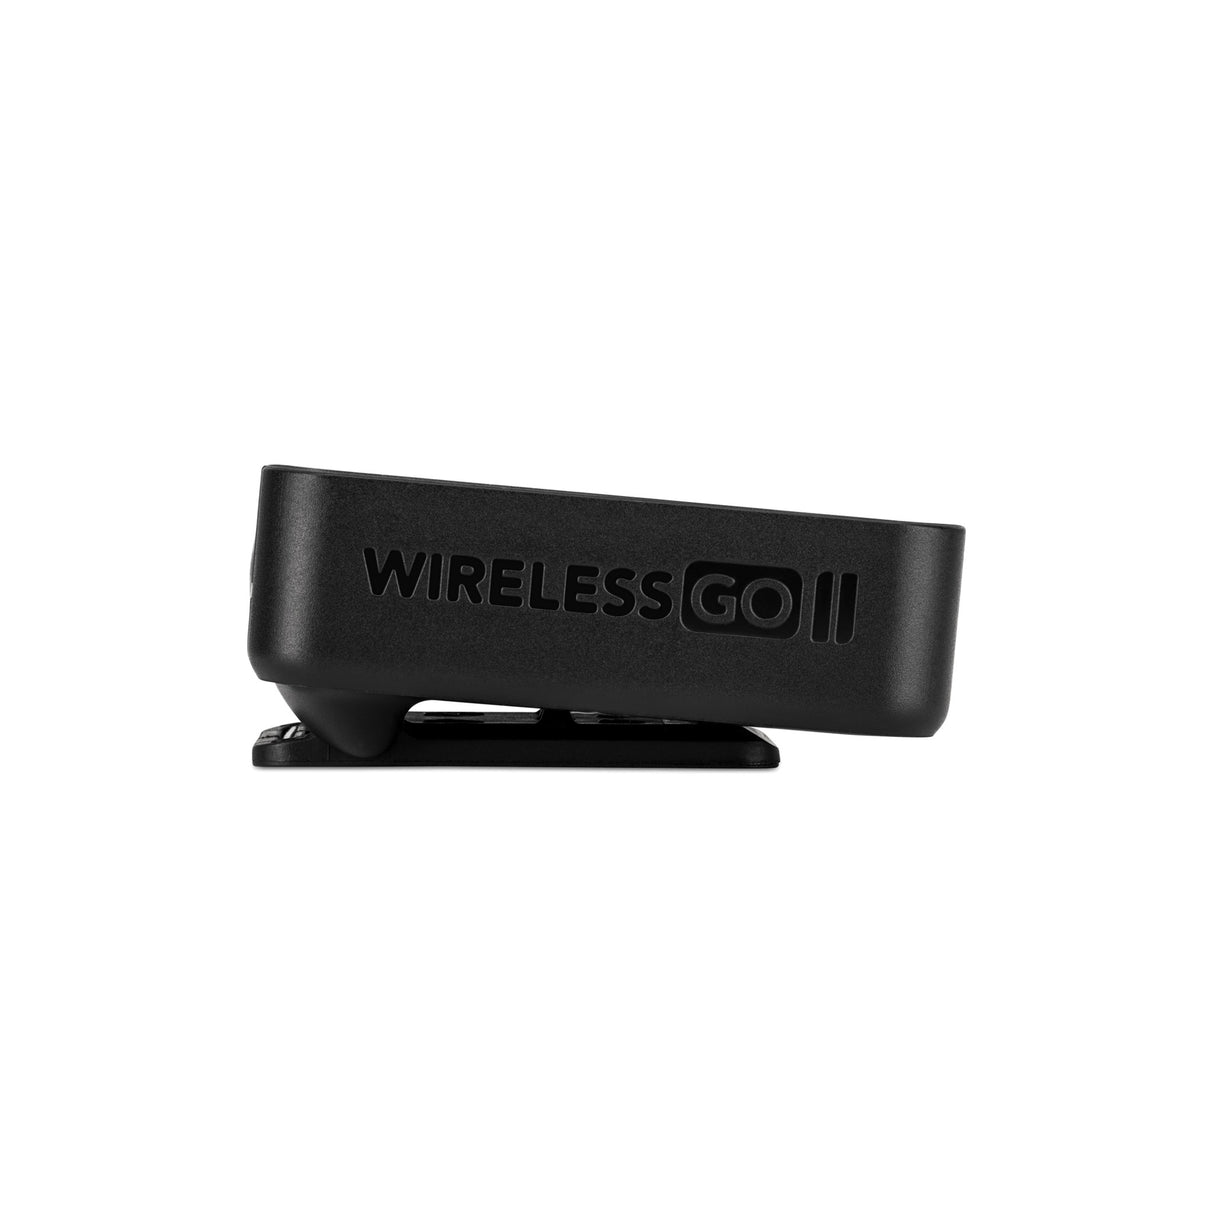 RODE Wireless GO II TX Ultra-Compact Wireless Microphone Transmitter